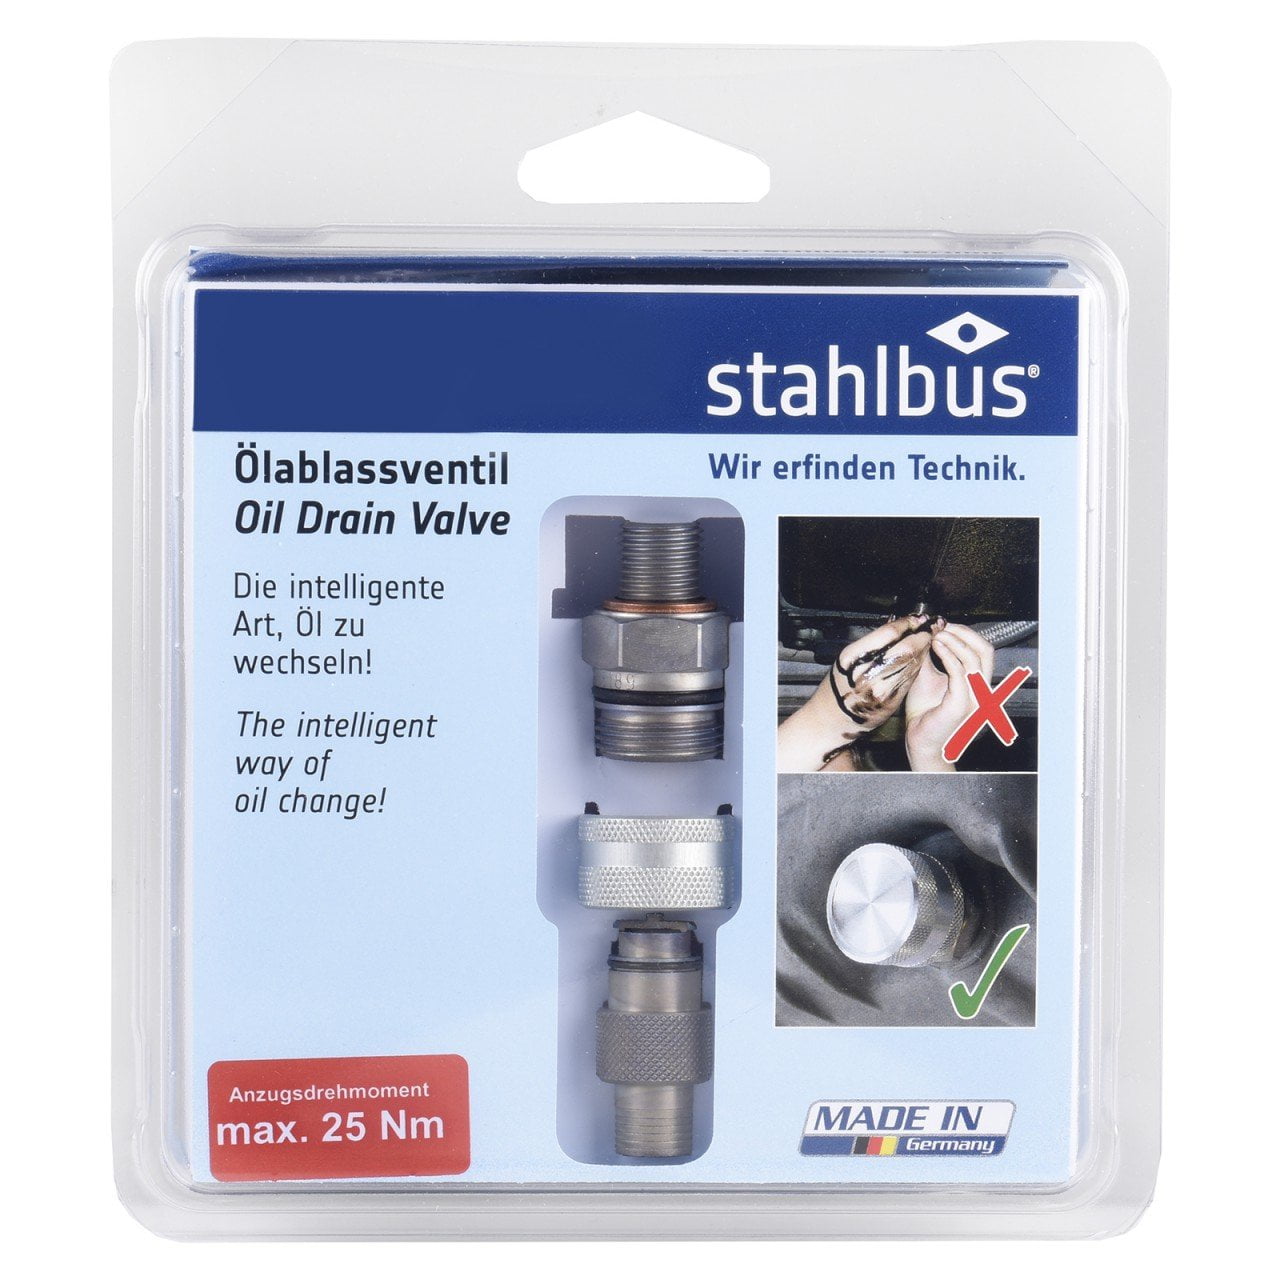 Stahlbus Oil Drain Valve Plug M18x1.5x12mm Steel M18 x 1.5 x 12mm by Stahlbus